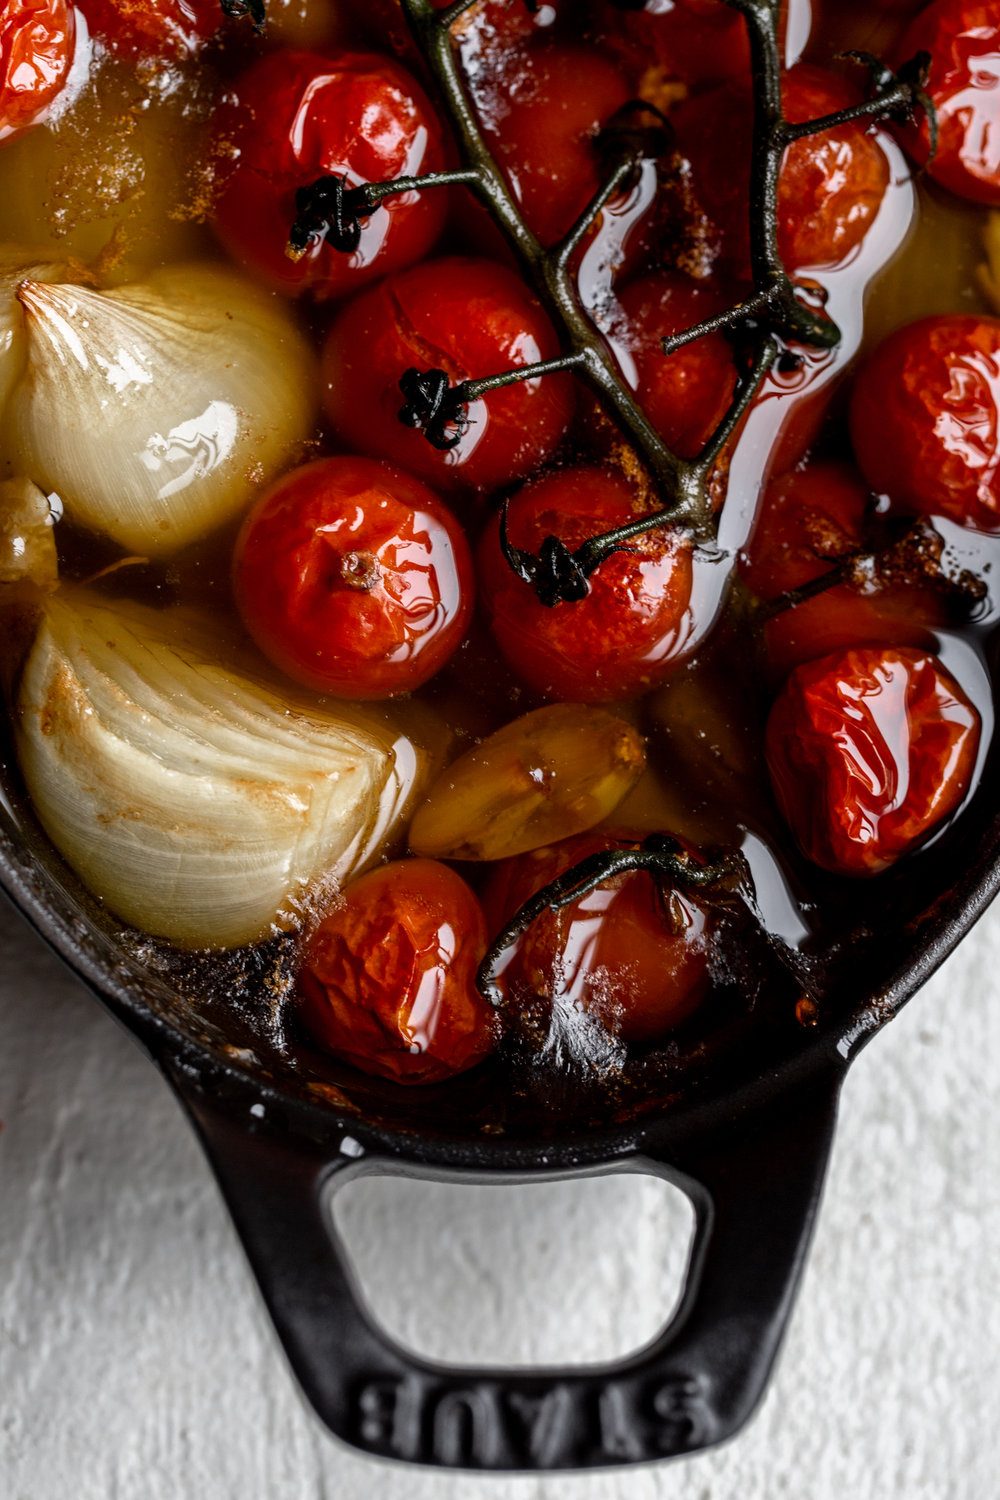 confit tomatoes with shallots and garlic